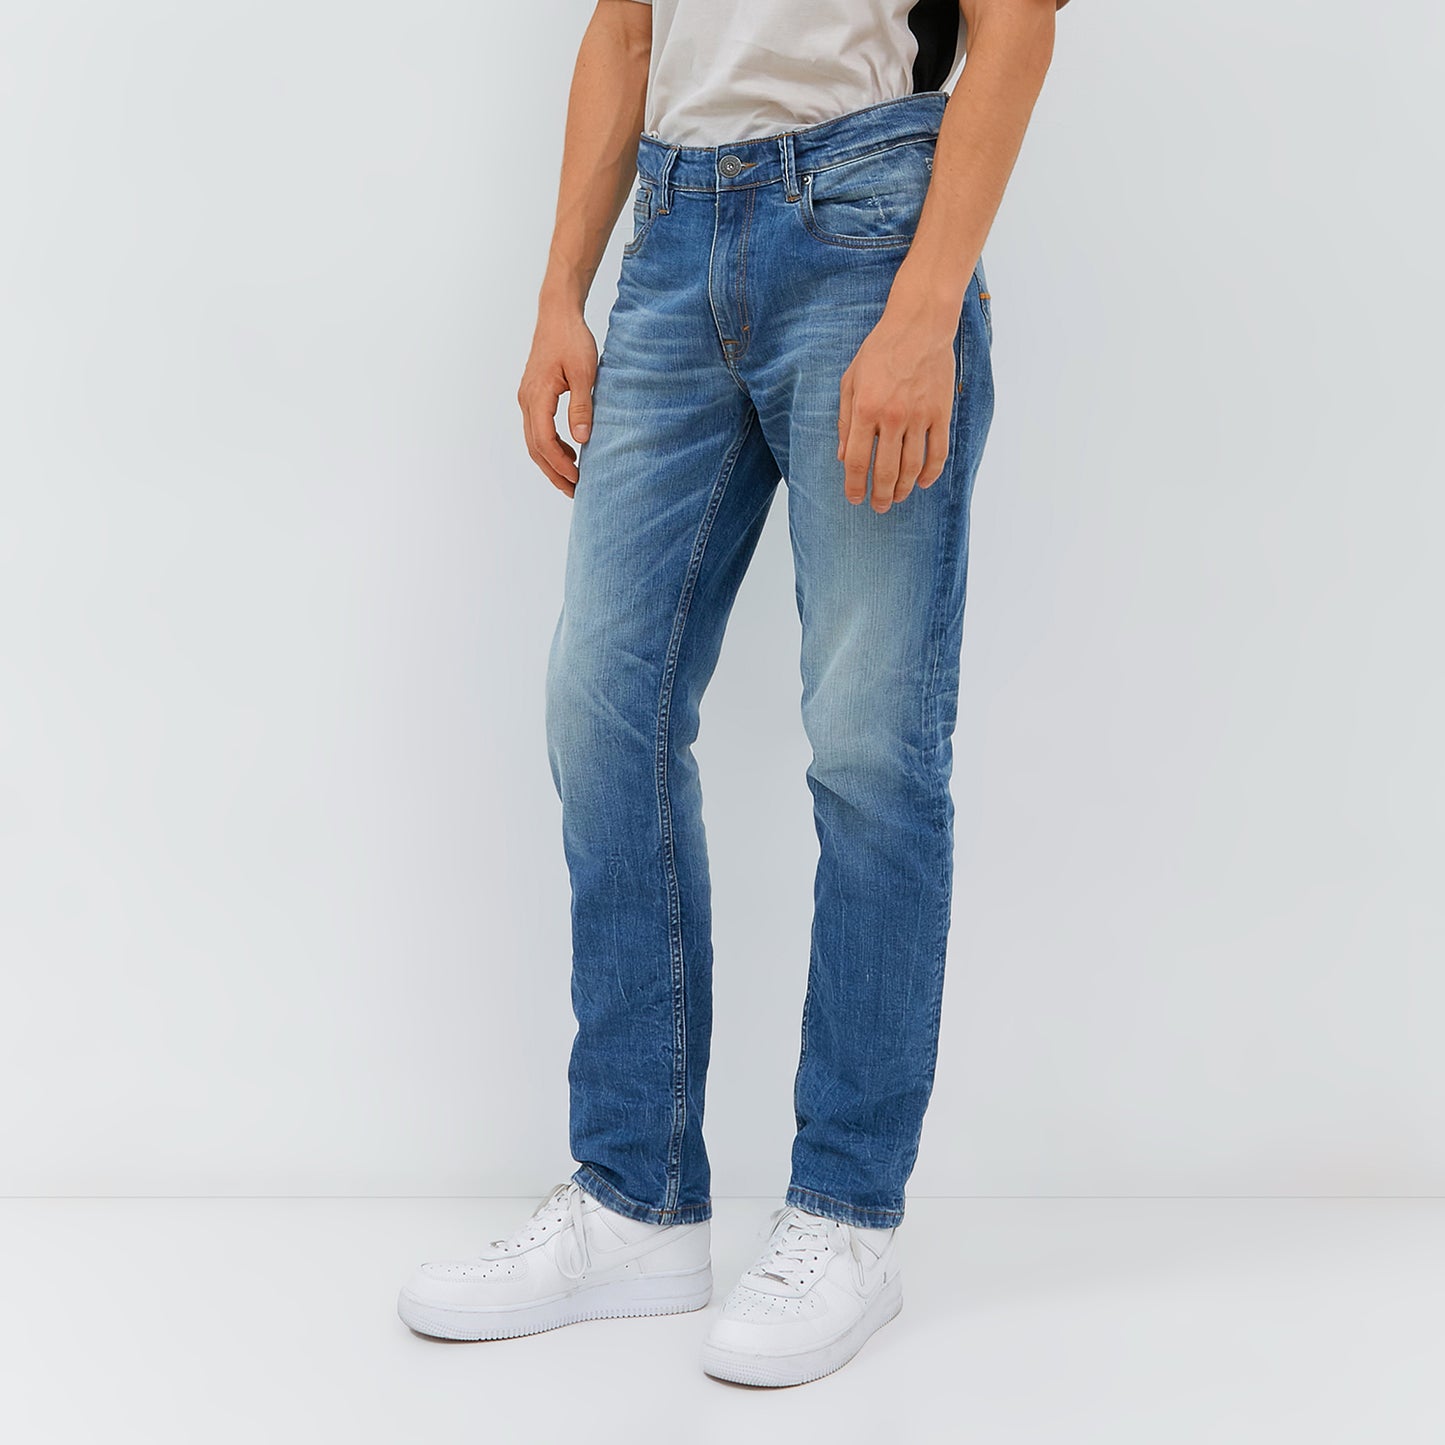 Osella Chris Slim Fit Jeans In Light Denim Wash